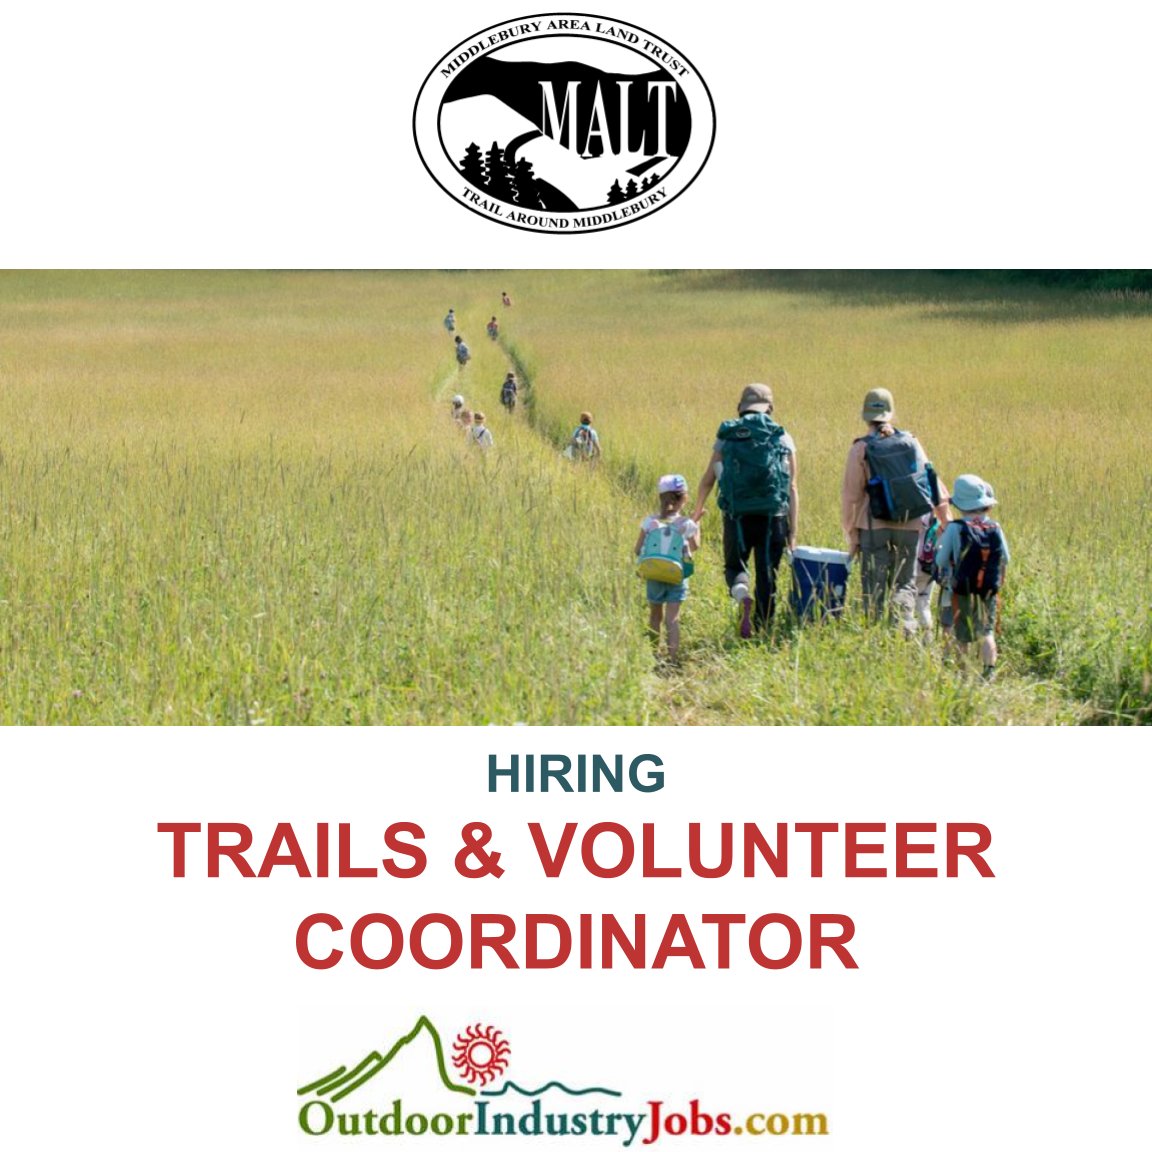 Apply Here: outdoorindustryjobs.com/JobDetail/GetJ…

#outdoorindustryjobs #malt #trailcoordinator #volunteer #volunteercoordinator #trailife #hiring #hiringnow